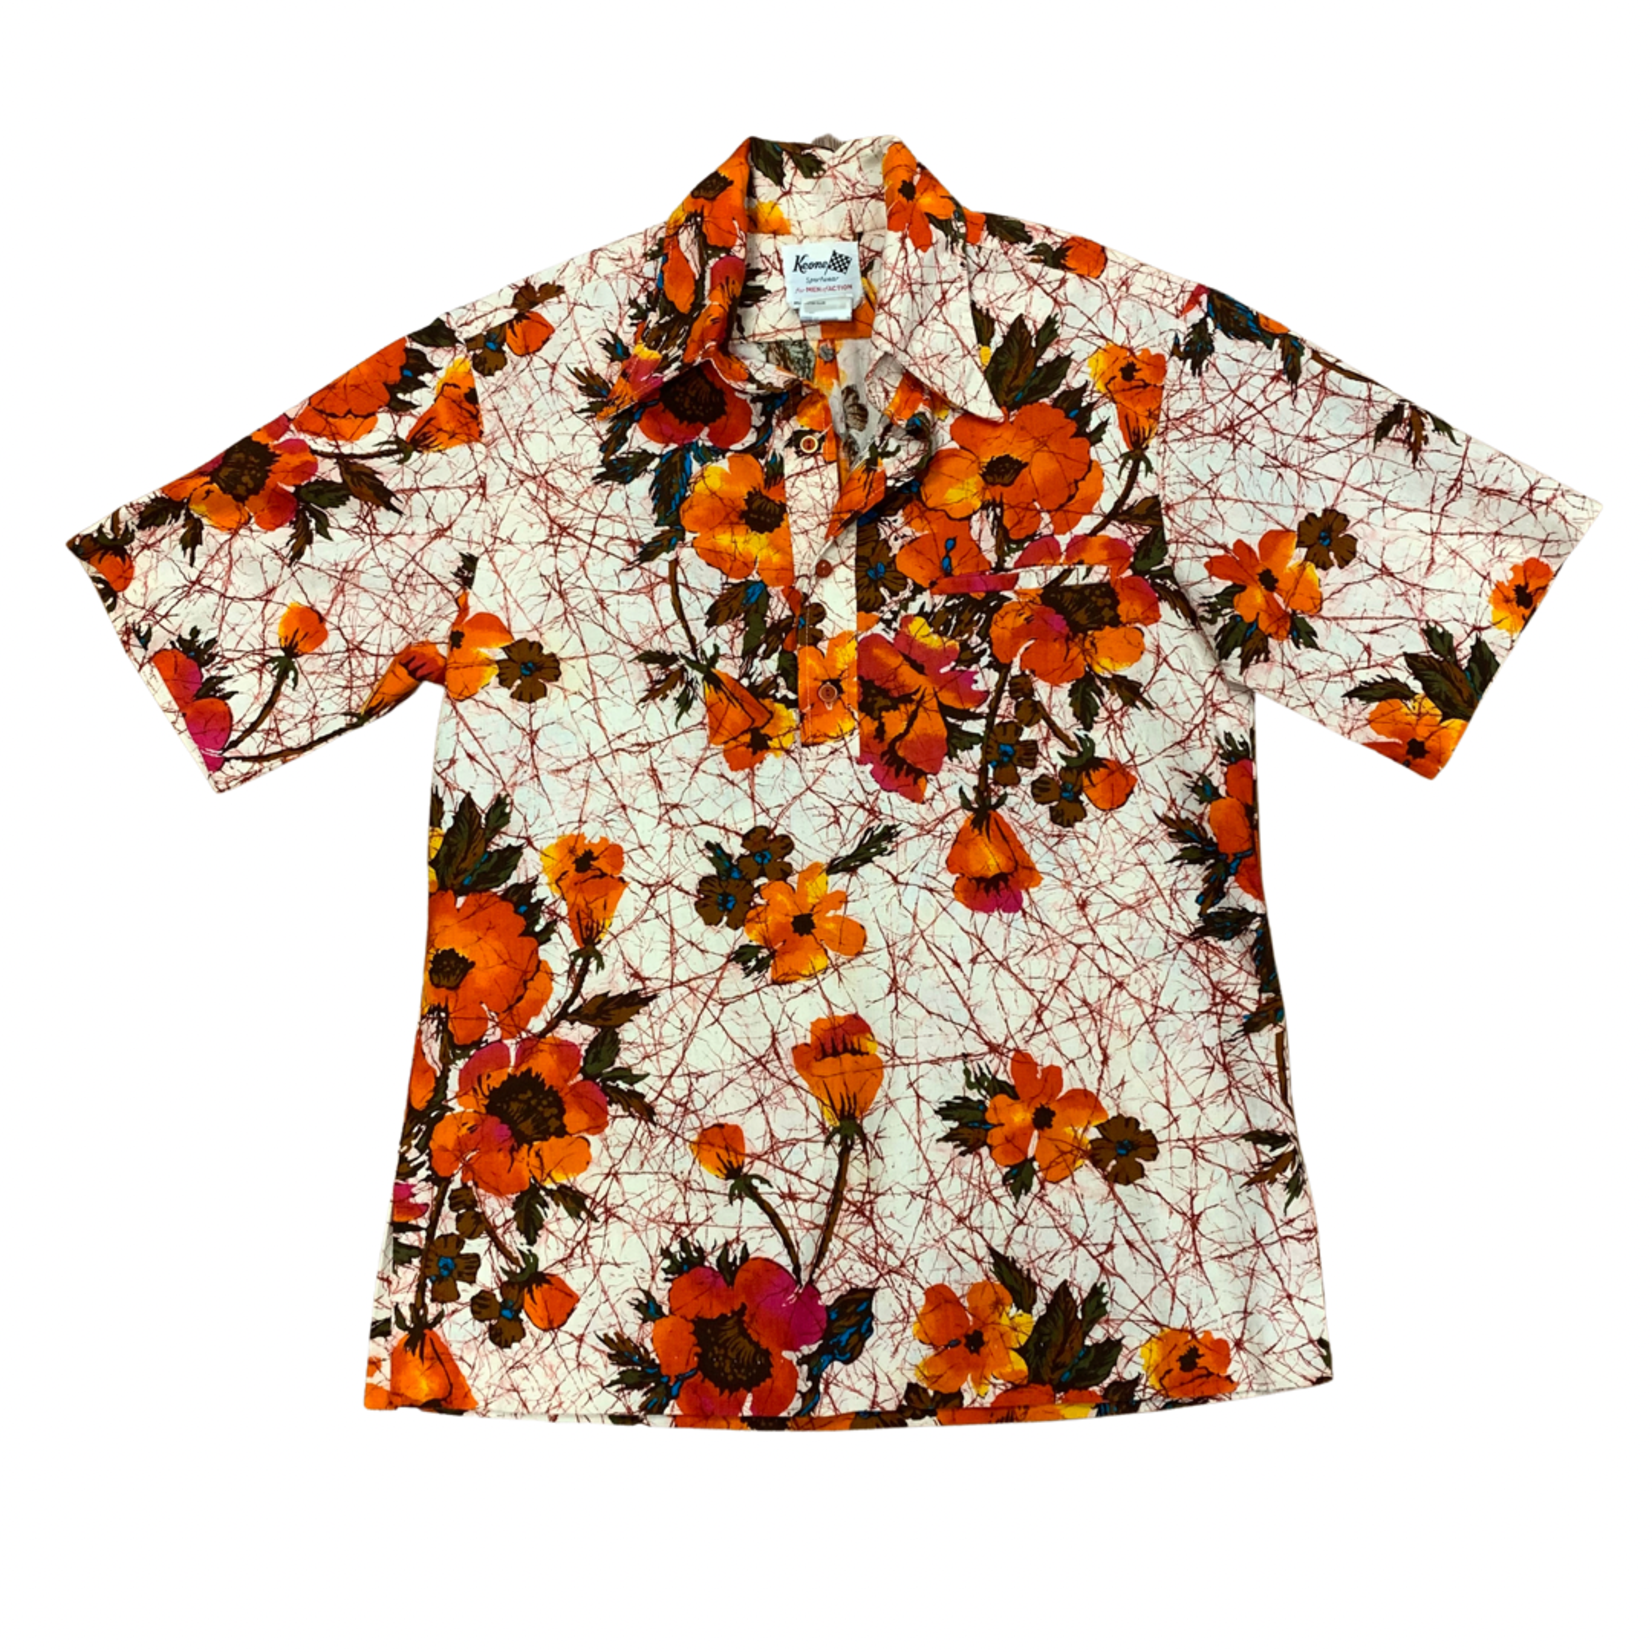 Mission Zero Men's Vintage Aloha Shirt - Keone Sportswear - Orange Floral Print - Medium